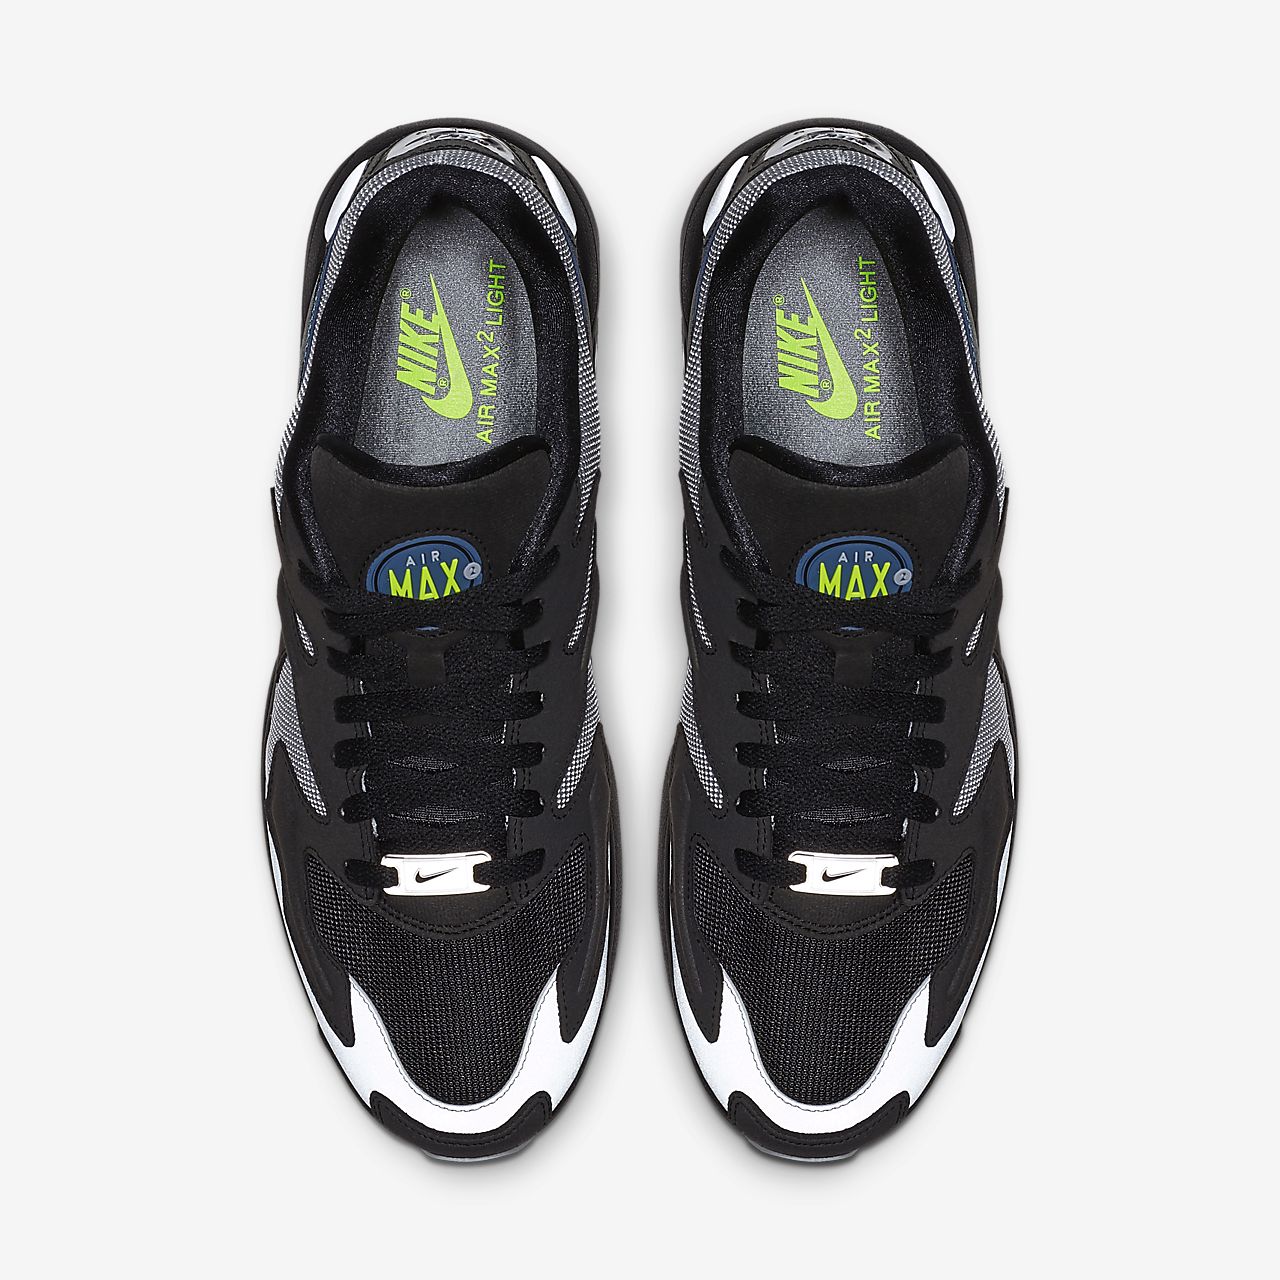 Nike Air Max2 Light - Sneakers - Sort/Grå | DK-38457